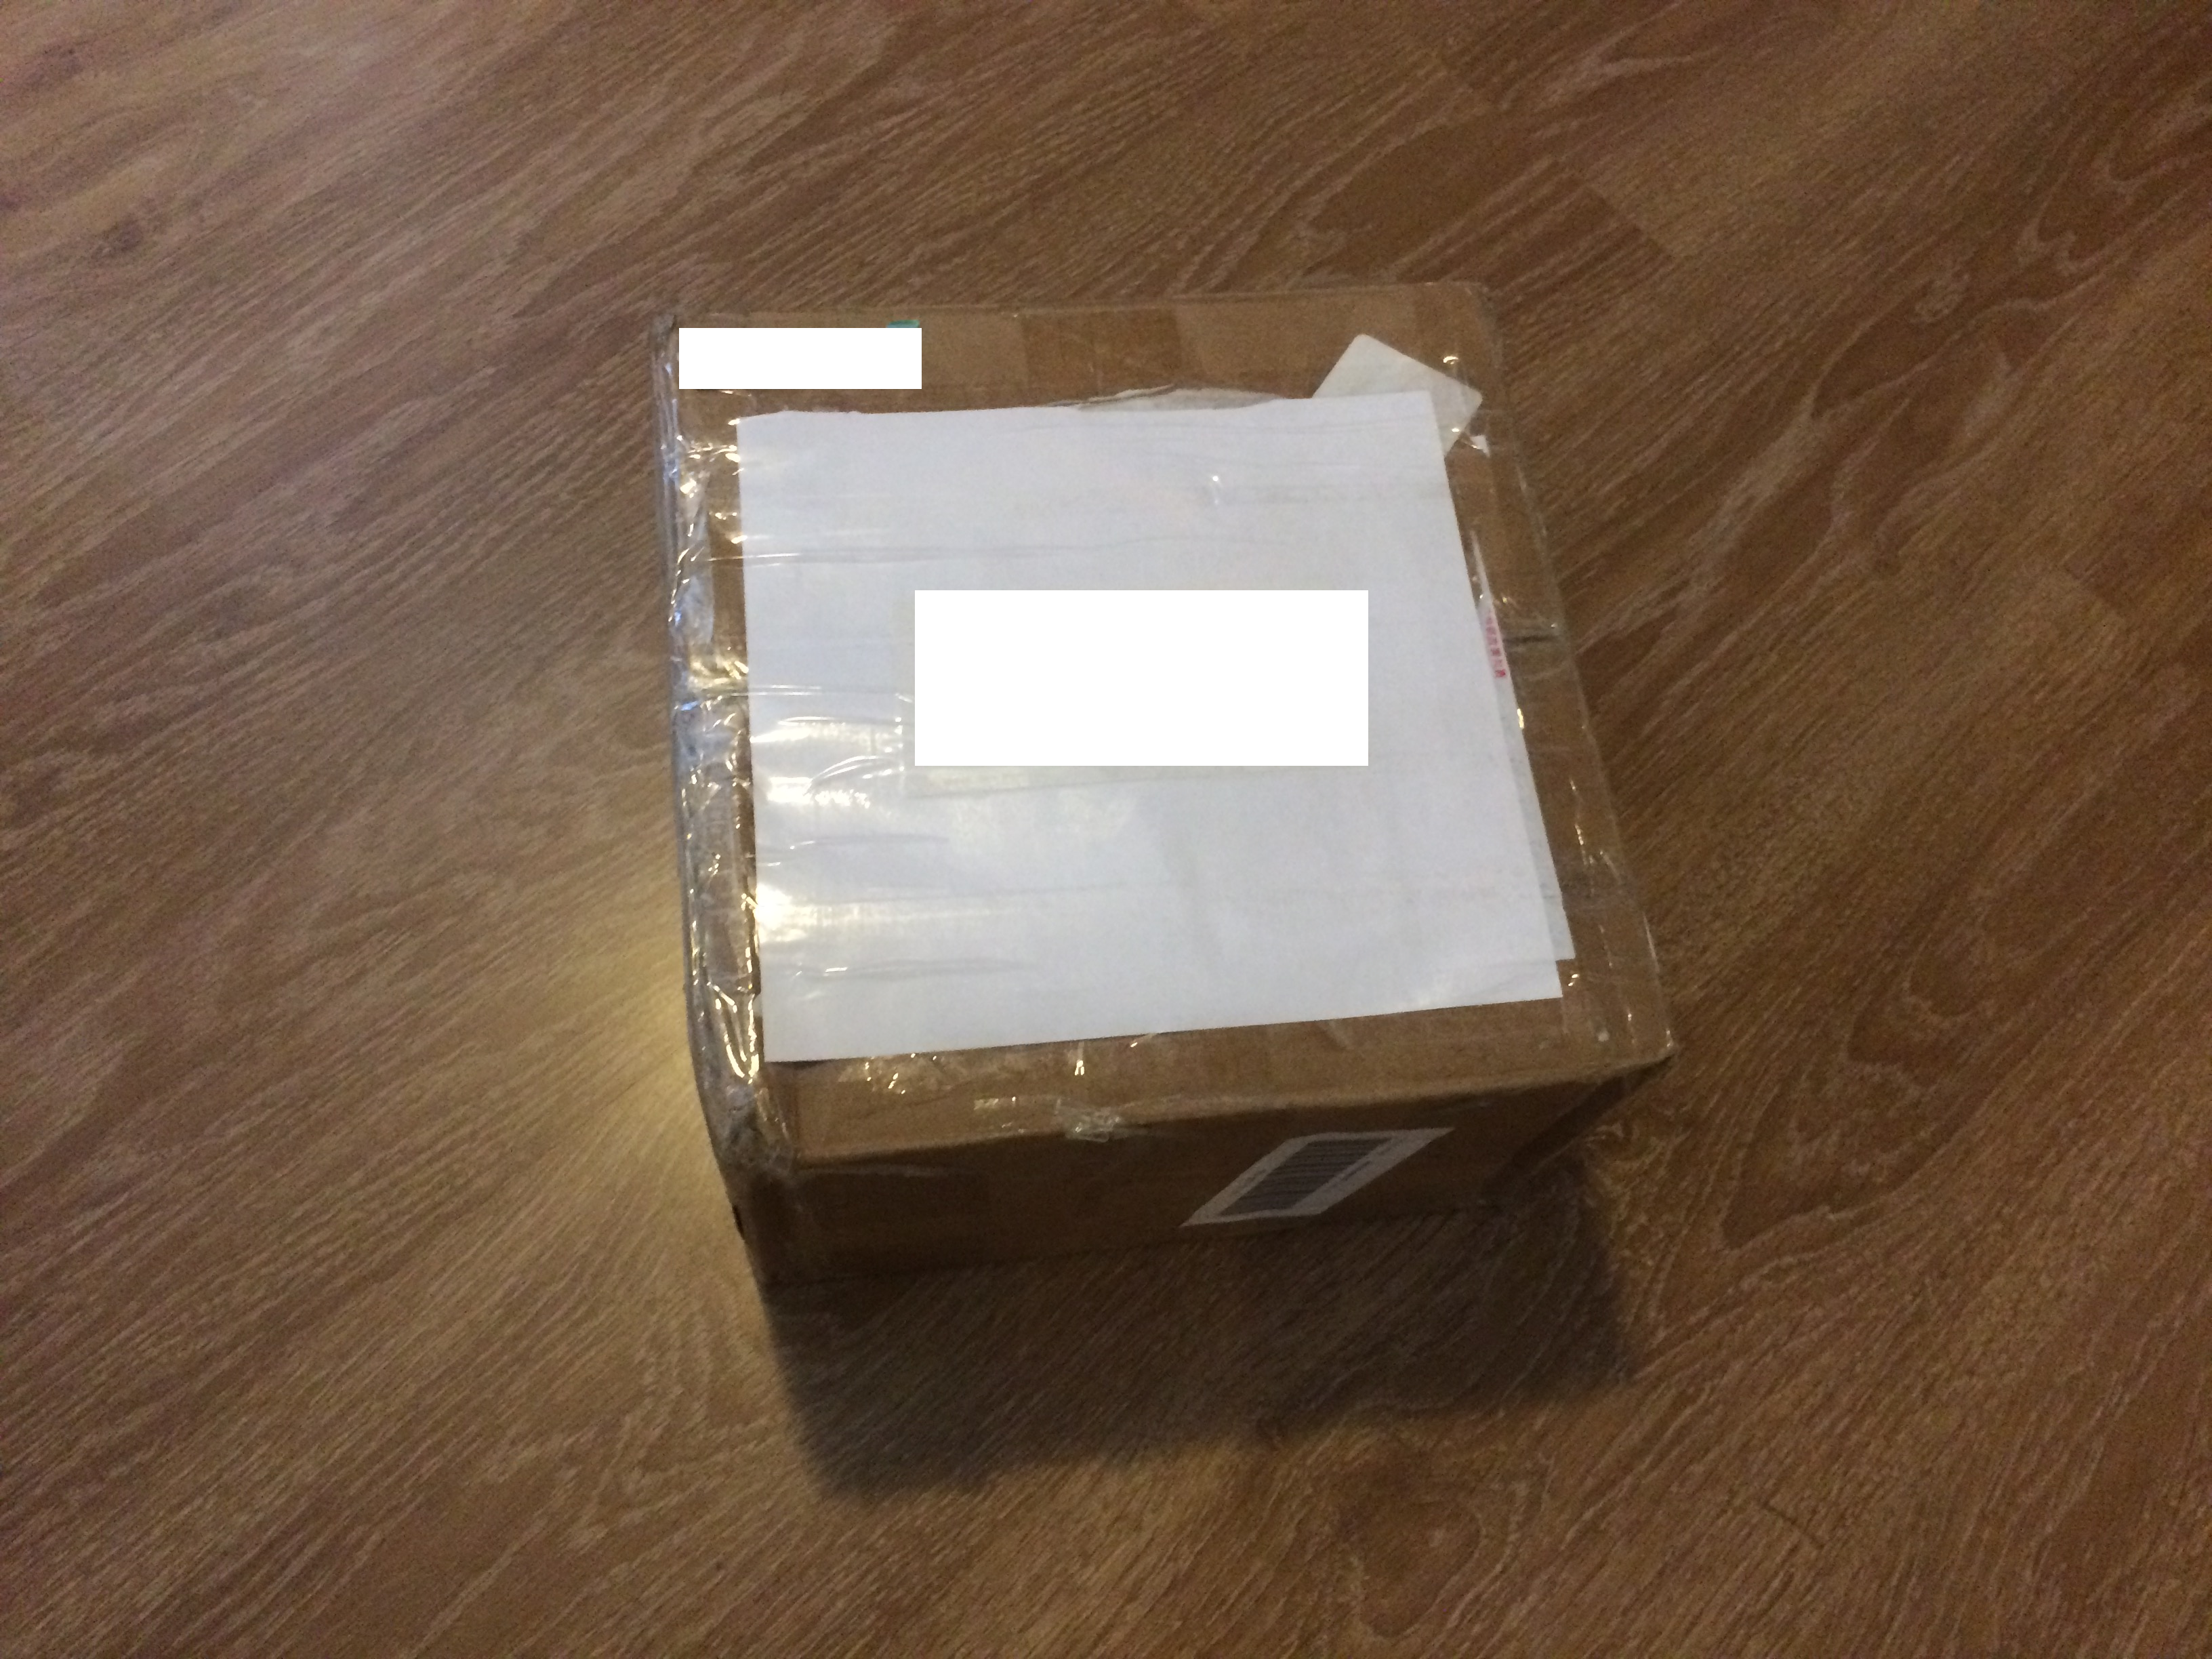 Final box ready for shipment